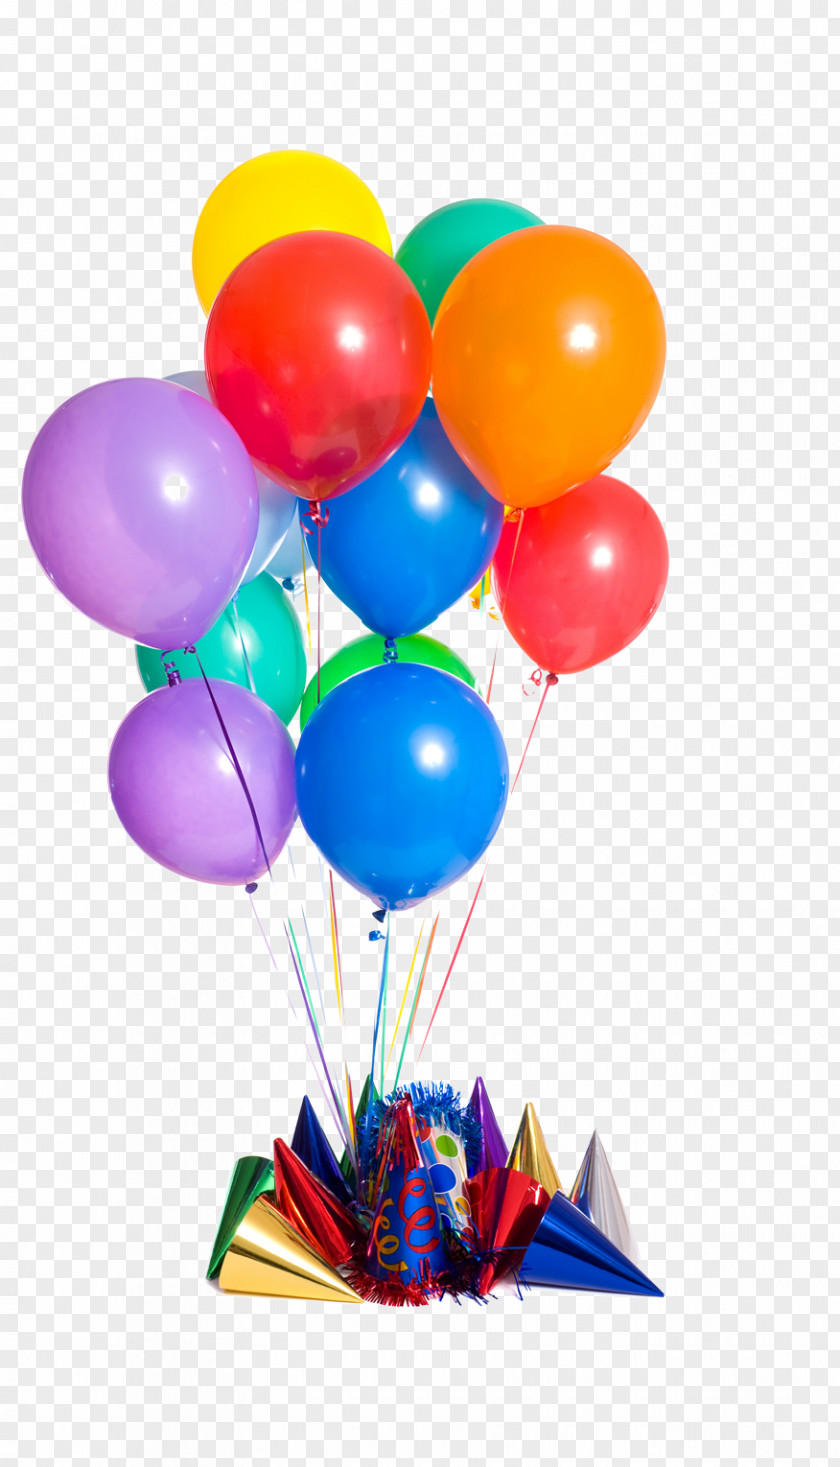 Colored Balloons Hot Air Balloon Pump Party PNG